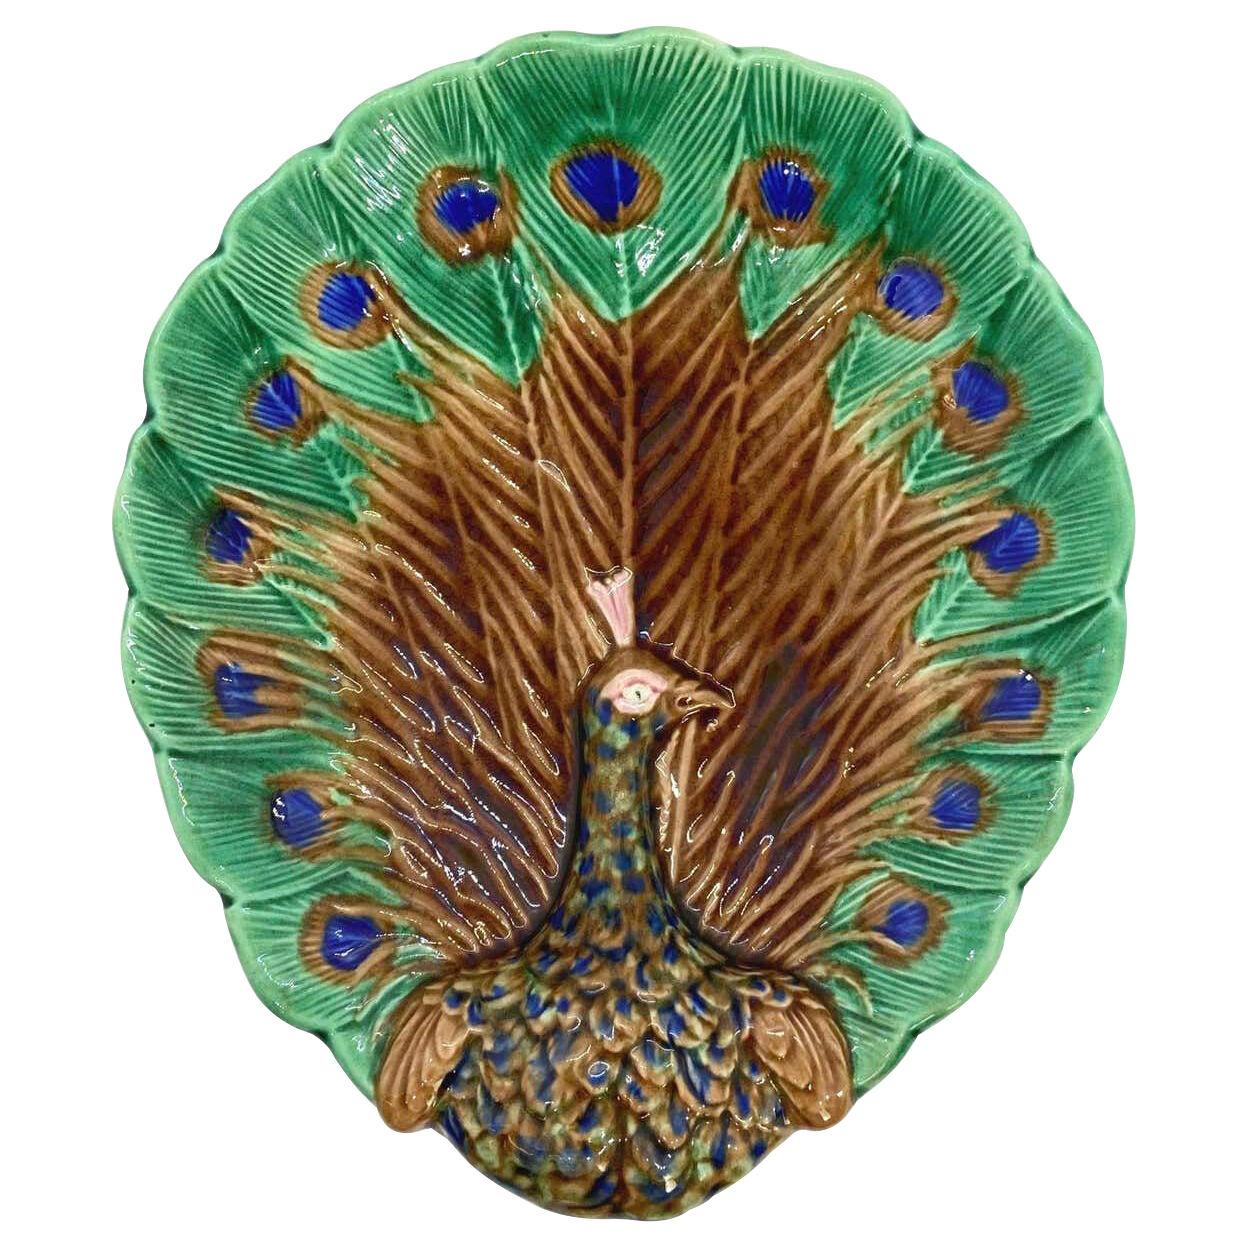 Wedgwood Majolica Peacock Tray, English, 1880